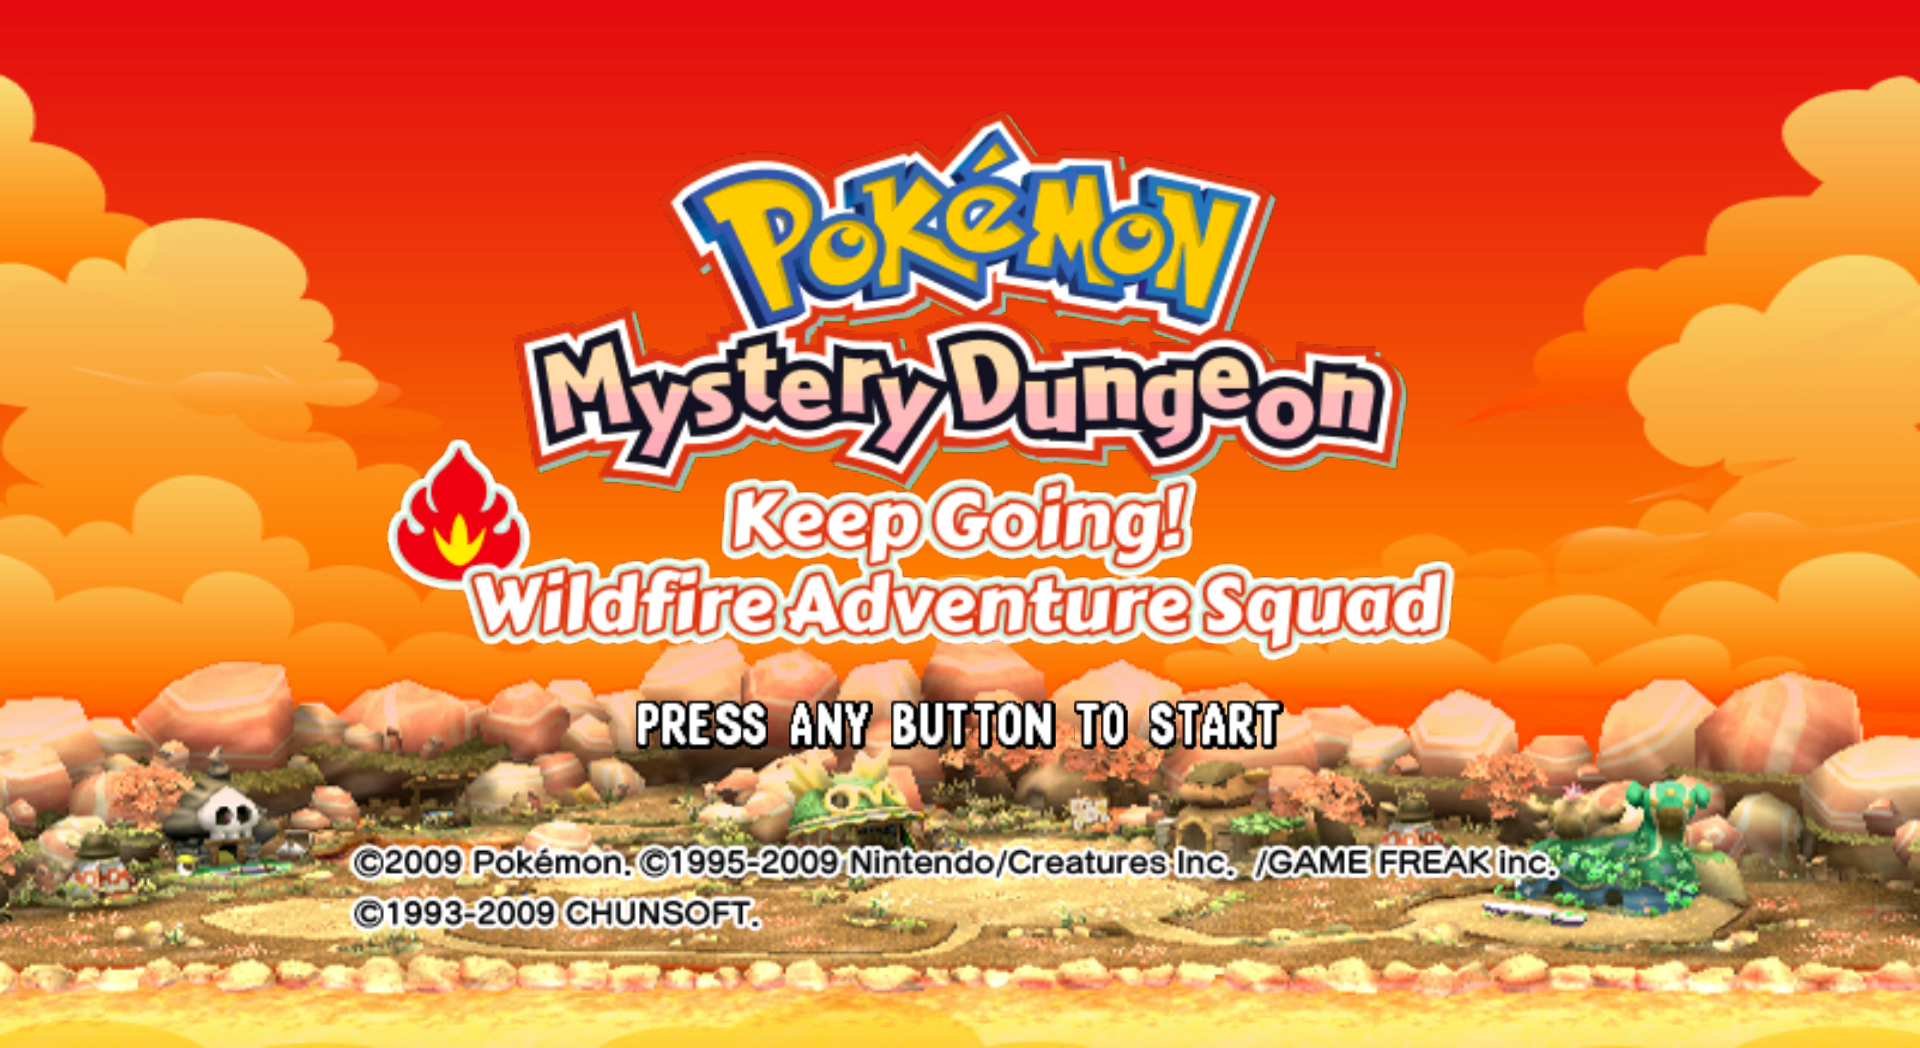 Descargar el ROM de Pokémon Mystery Dungeon - Keep Going! Wildfire Adventure Squad